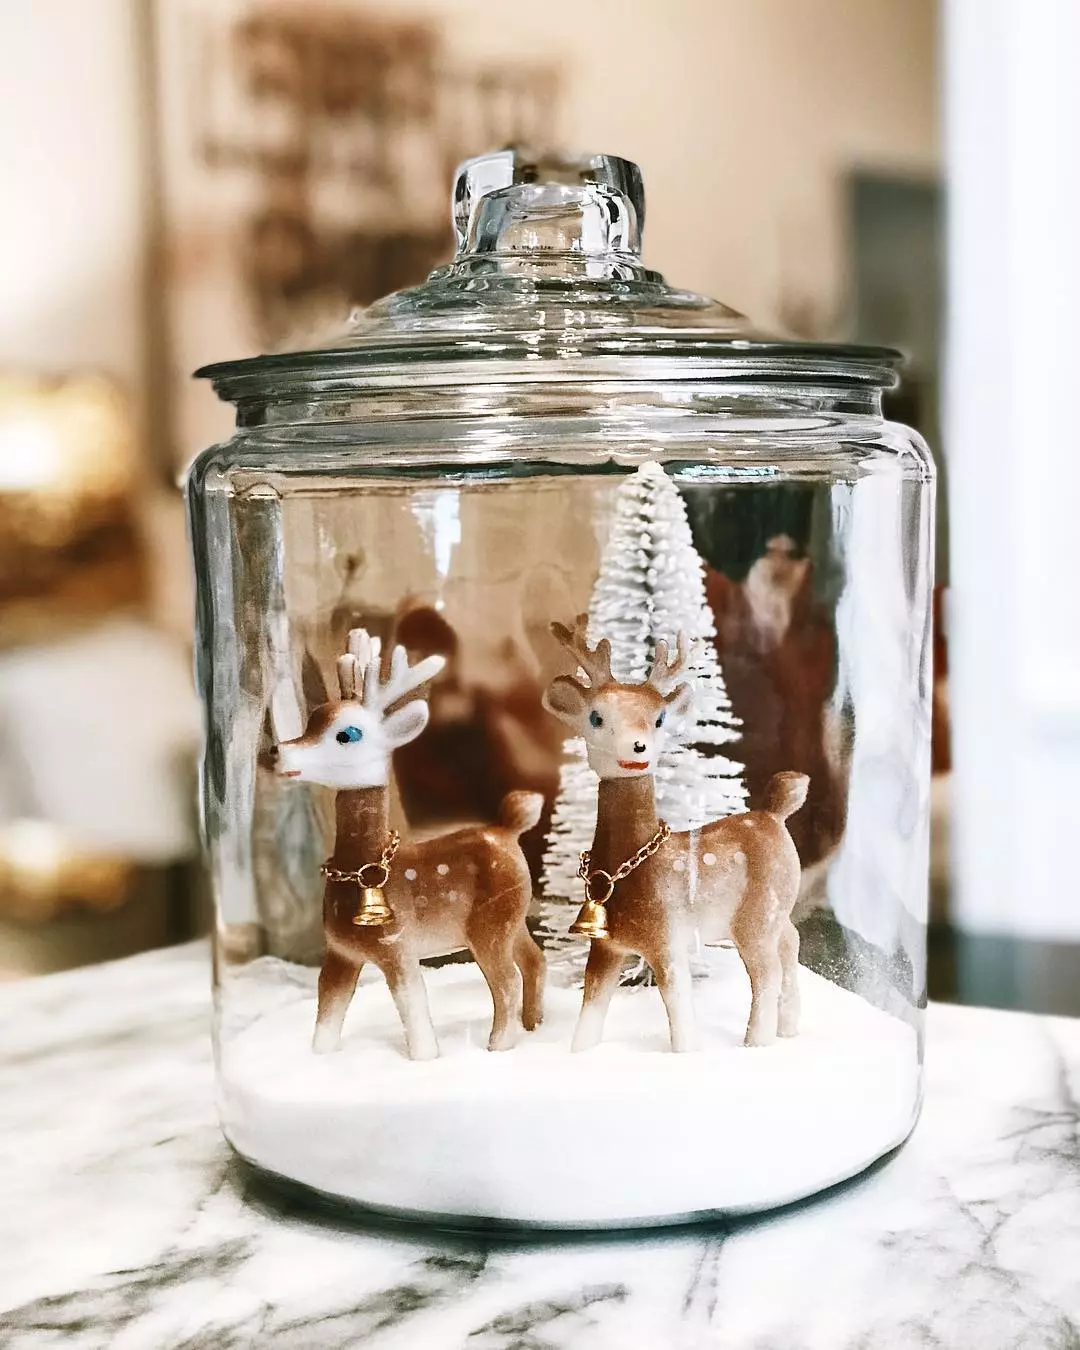 glass cookie jar with decorative deer